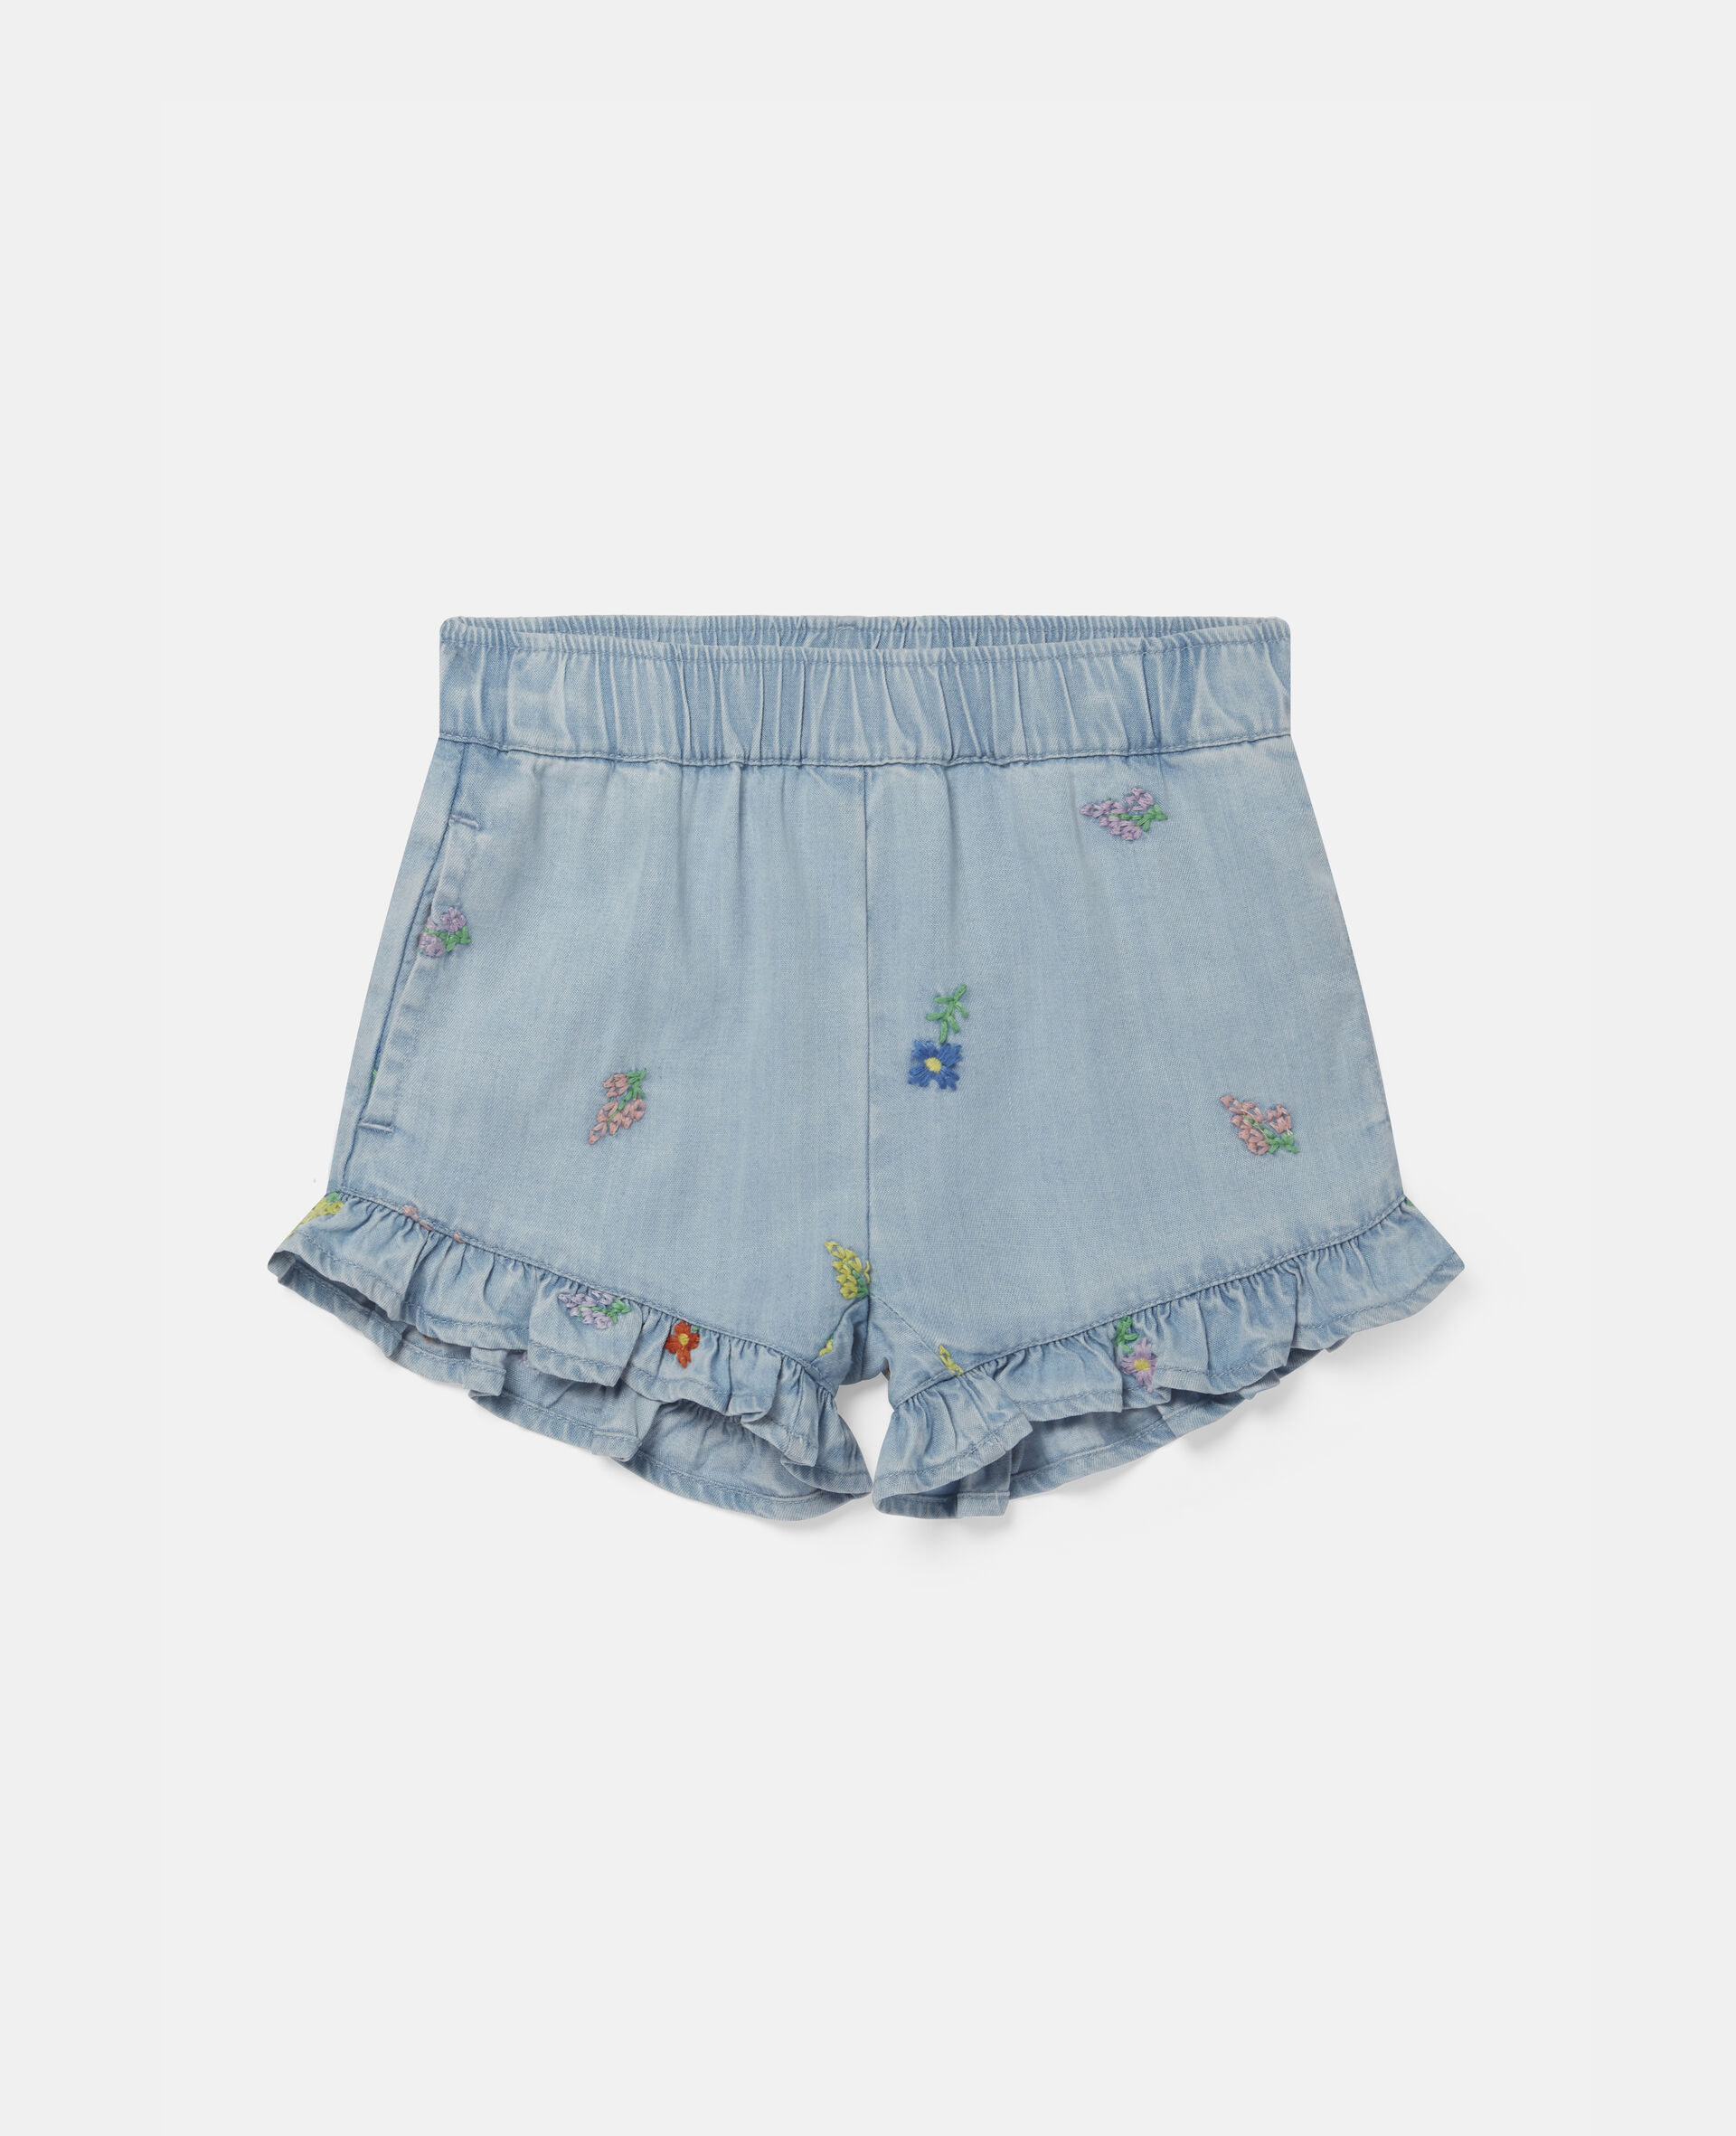 Embroidered Flowers Denim Shorts-Blue-large